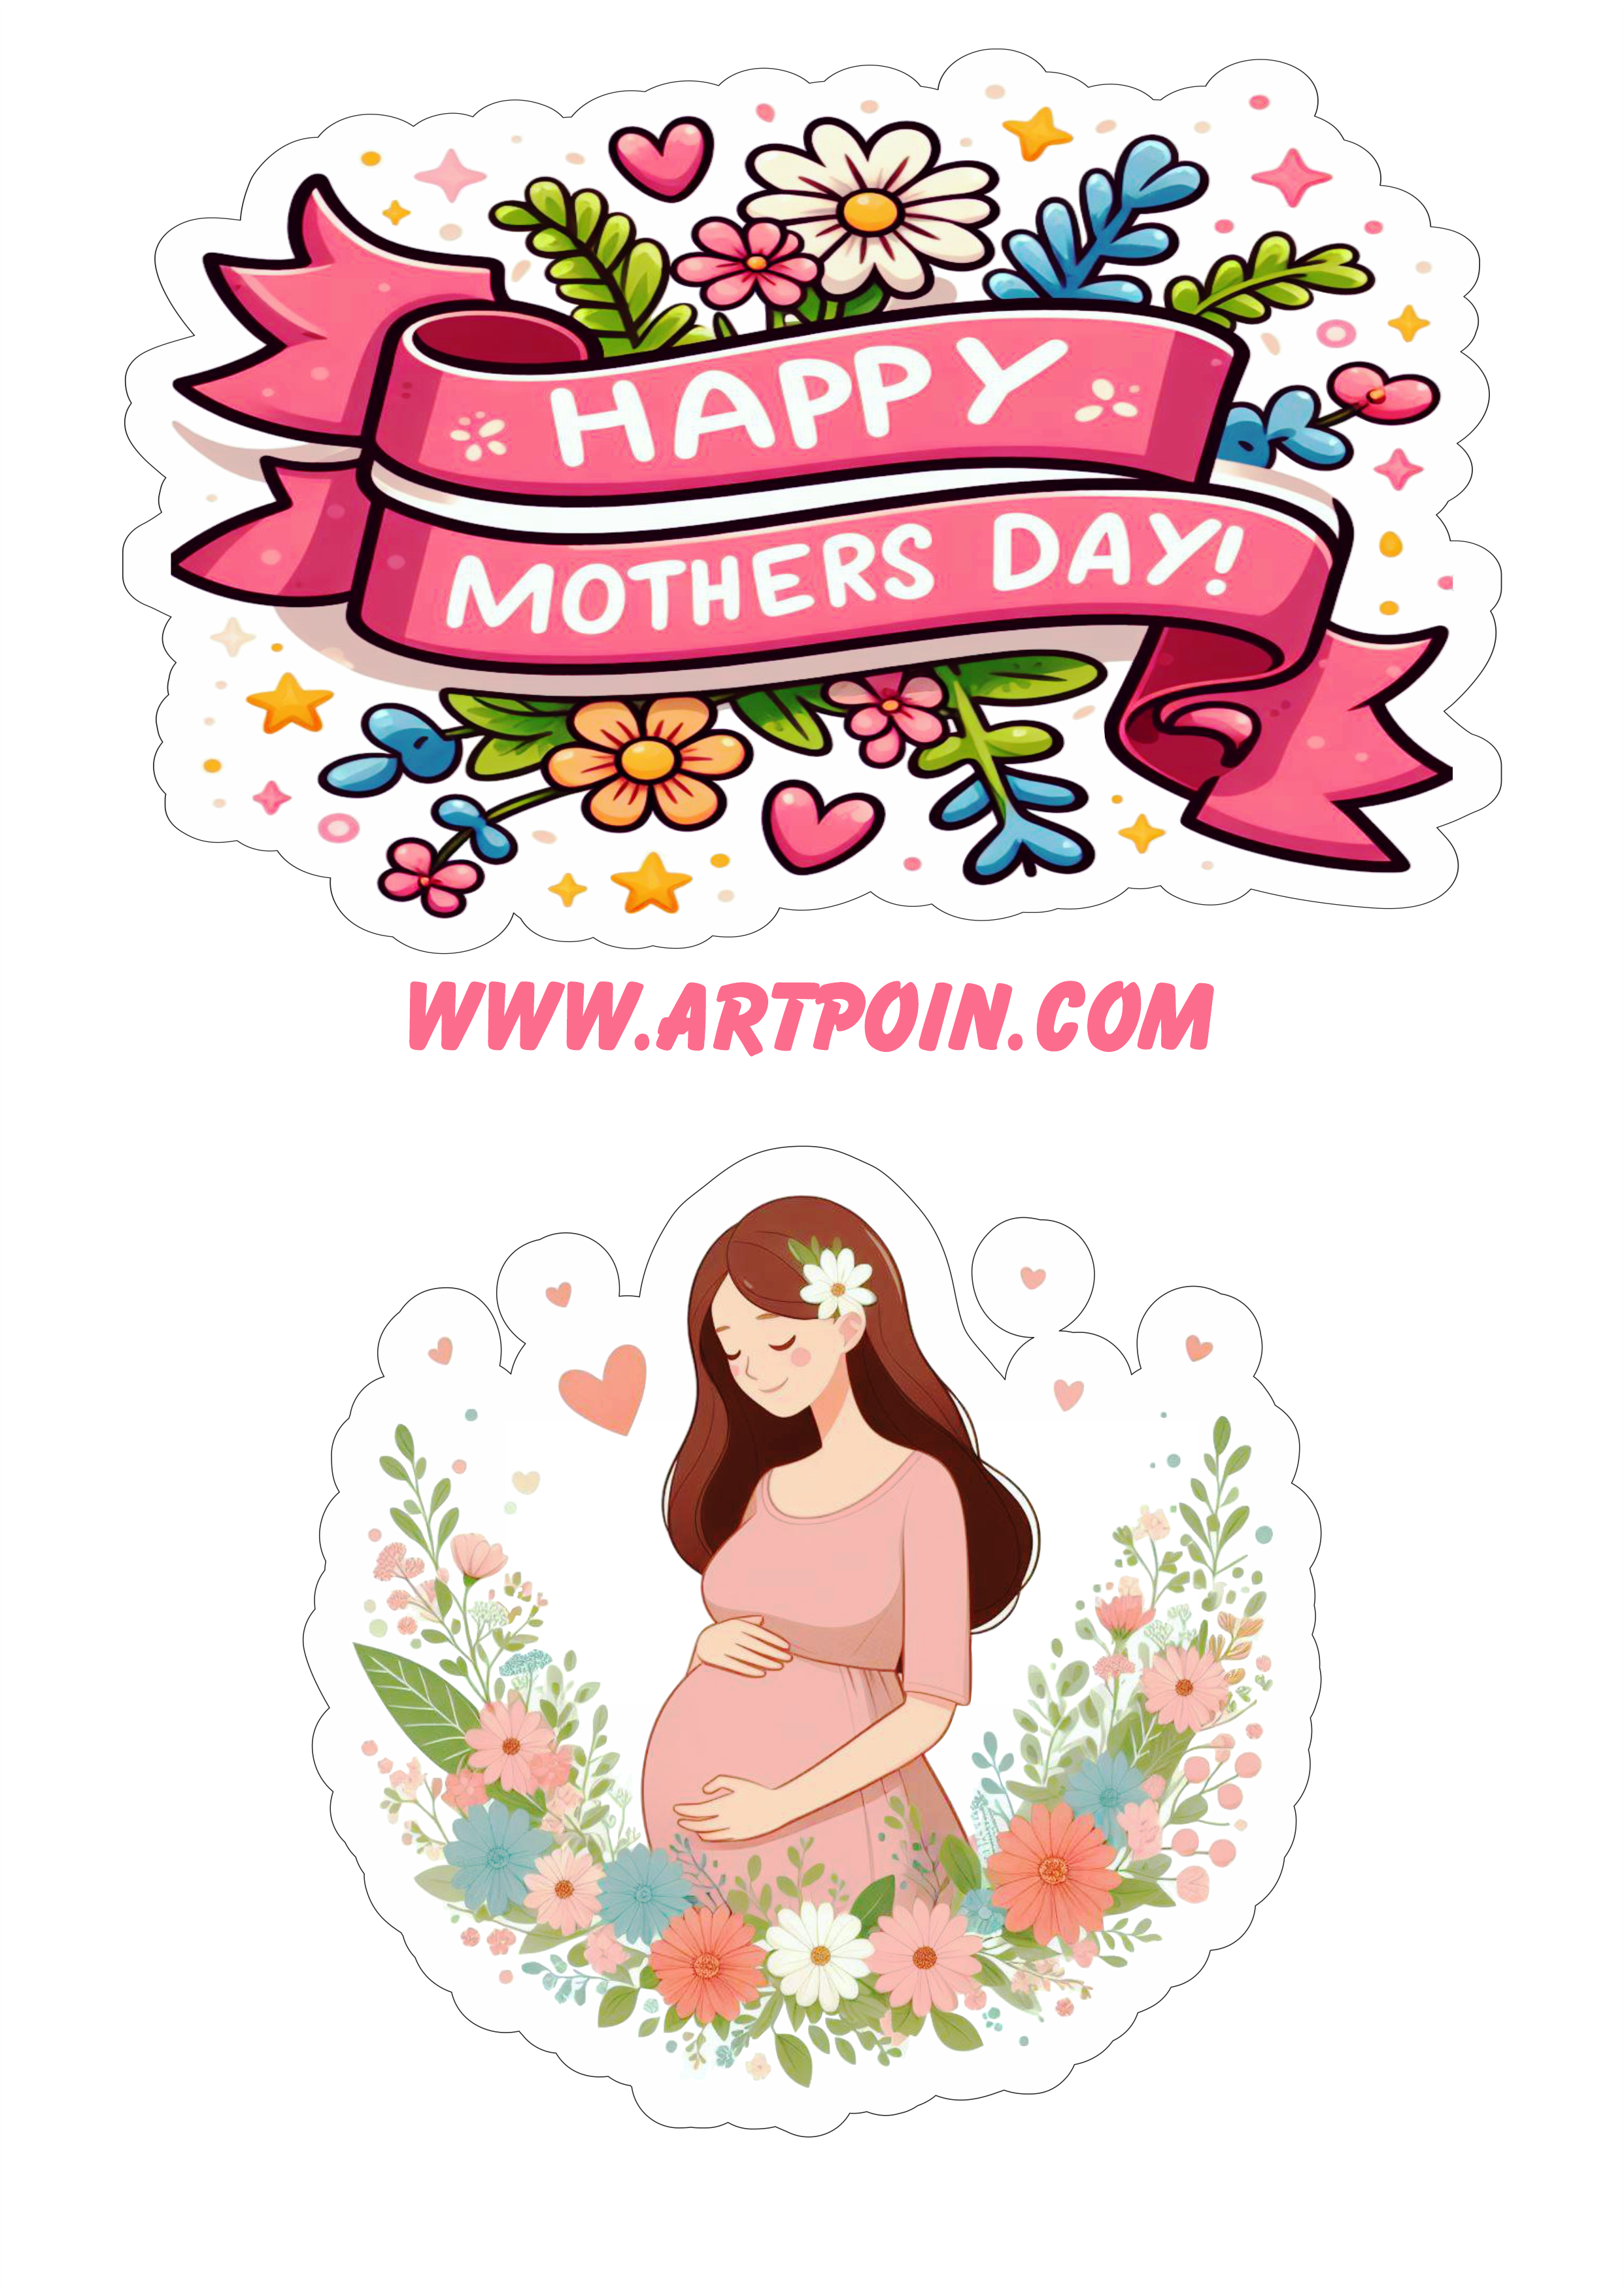 Dia das mães happy mothers day topo de bolo pronto para imprimir png